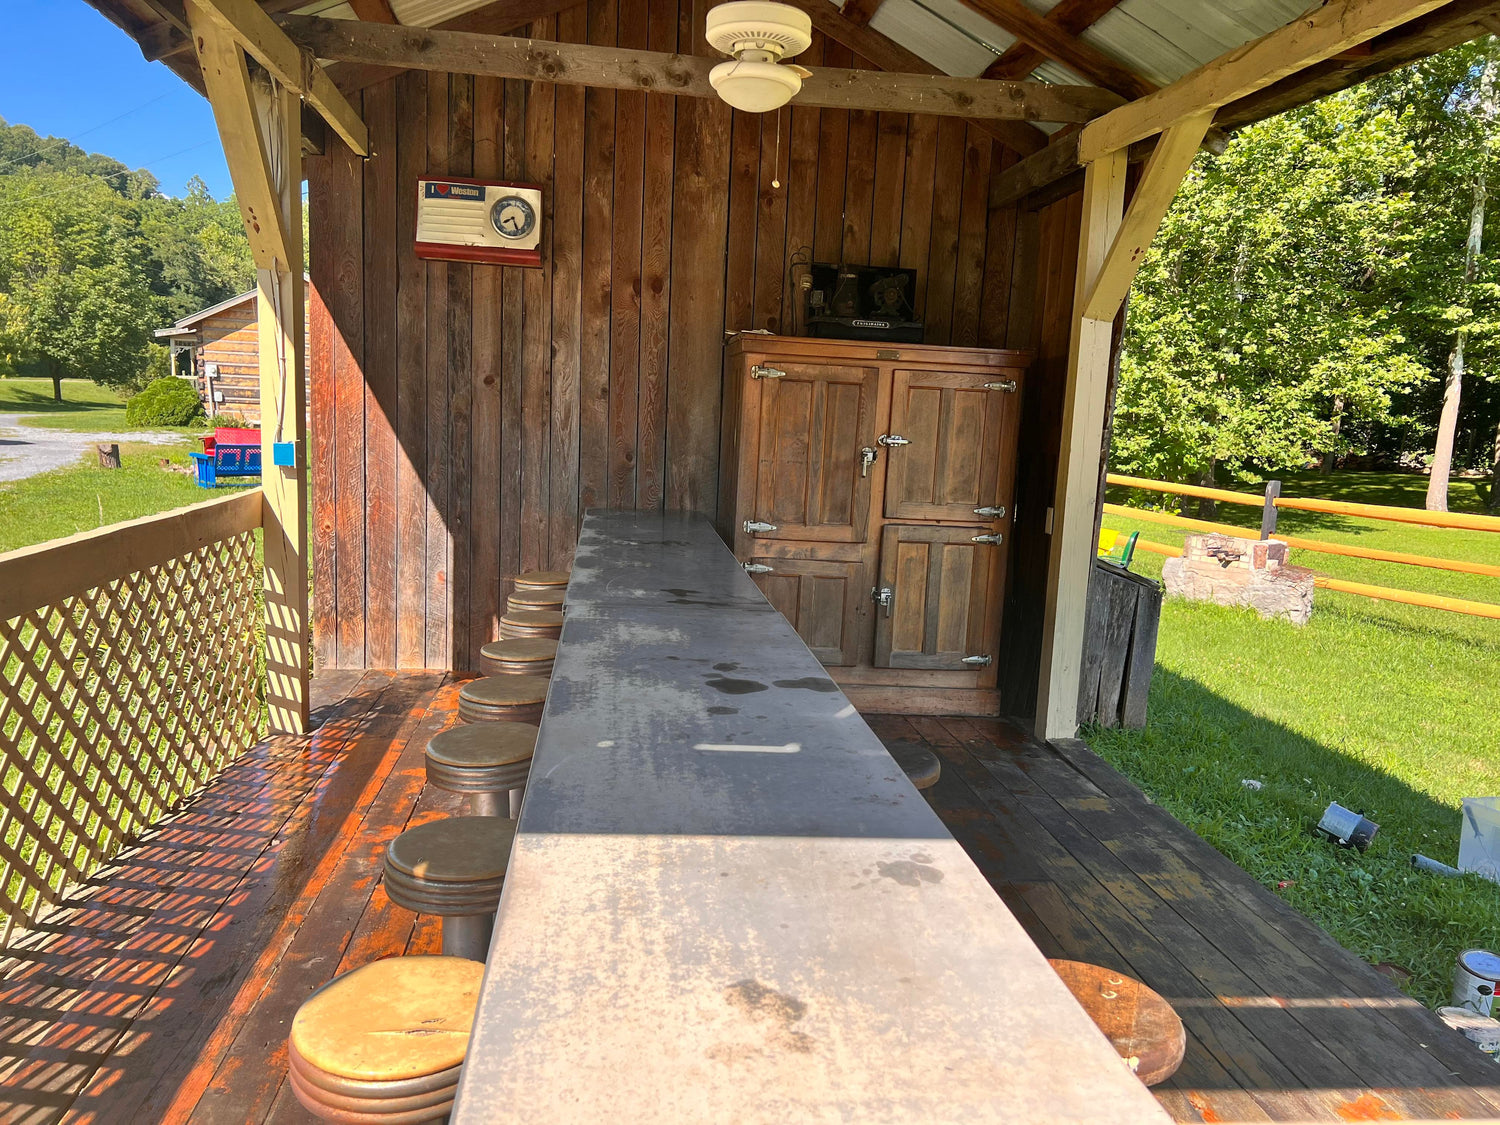 Retro seating area outdoor bar & grill at Appalachian Cabins Lodging Seneca Rocks